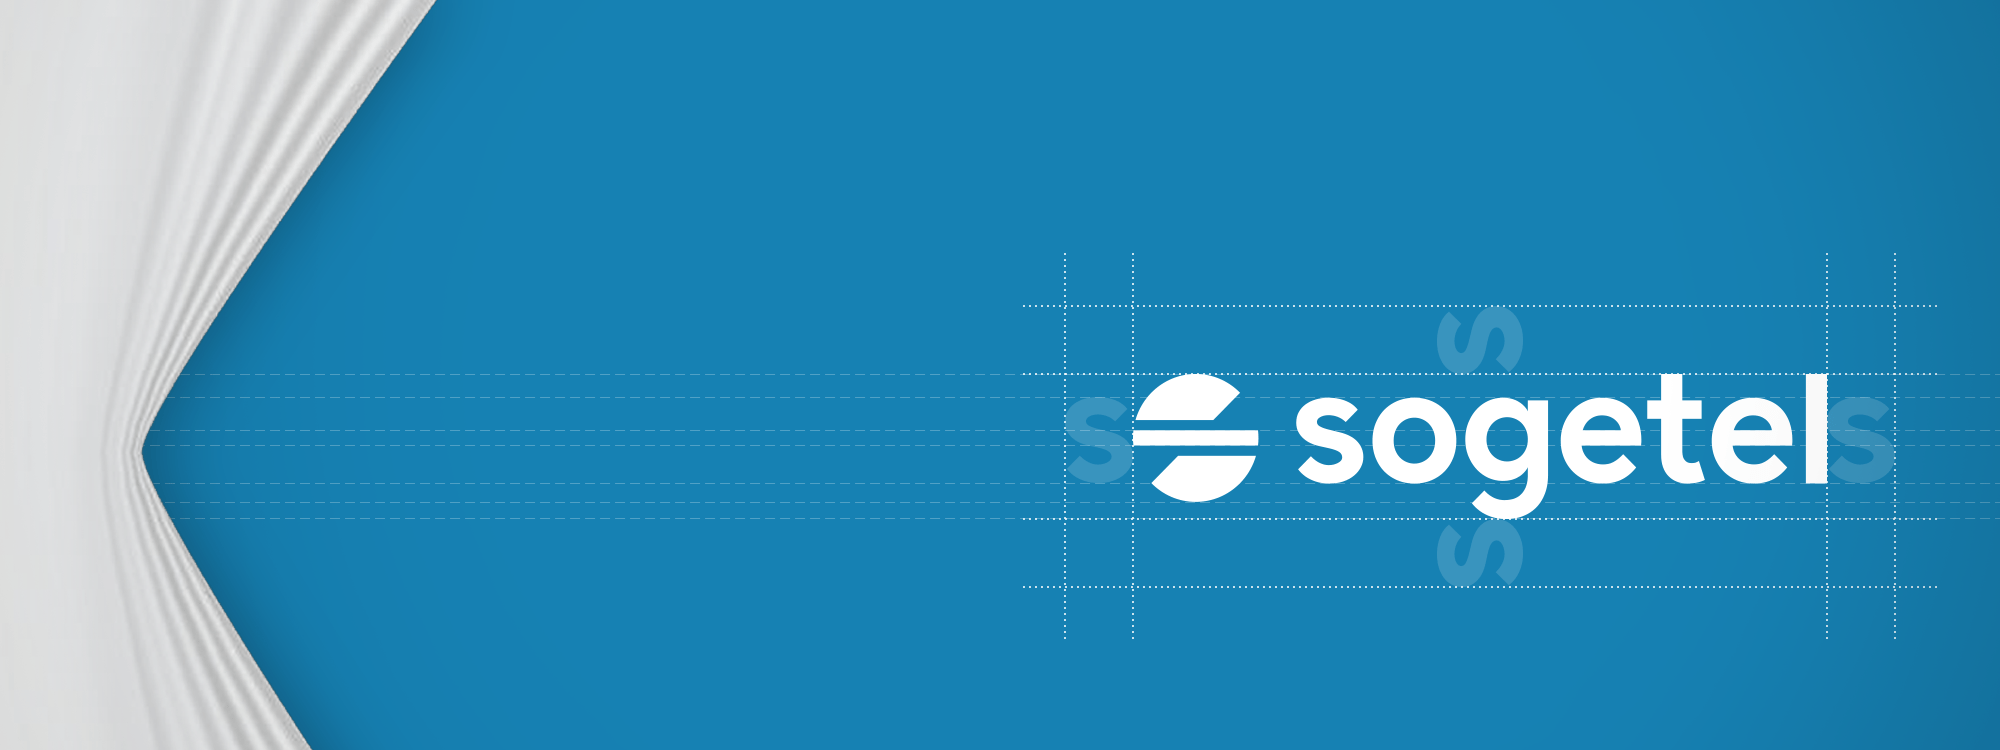 2023: Sogetel restarts from new logo